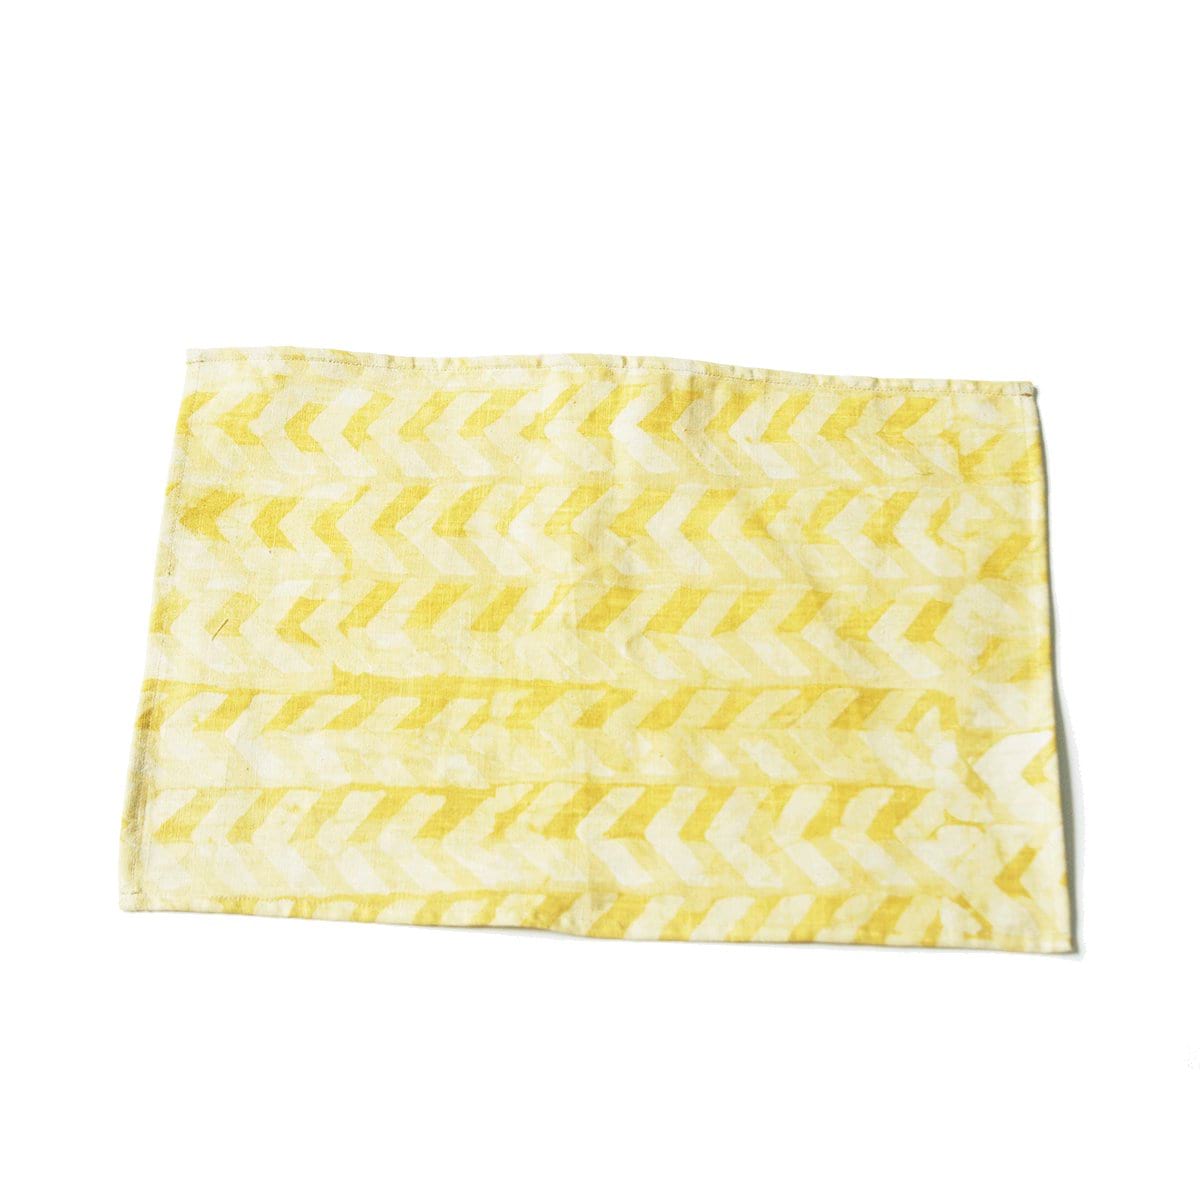 SOLD OUT Linen Placemat Maize Gold Chevron Hand Batik Block Printed Set of 4